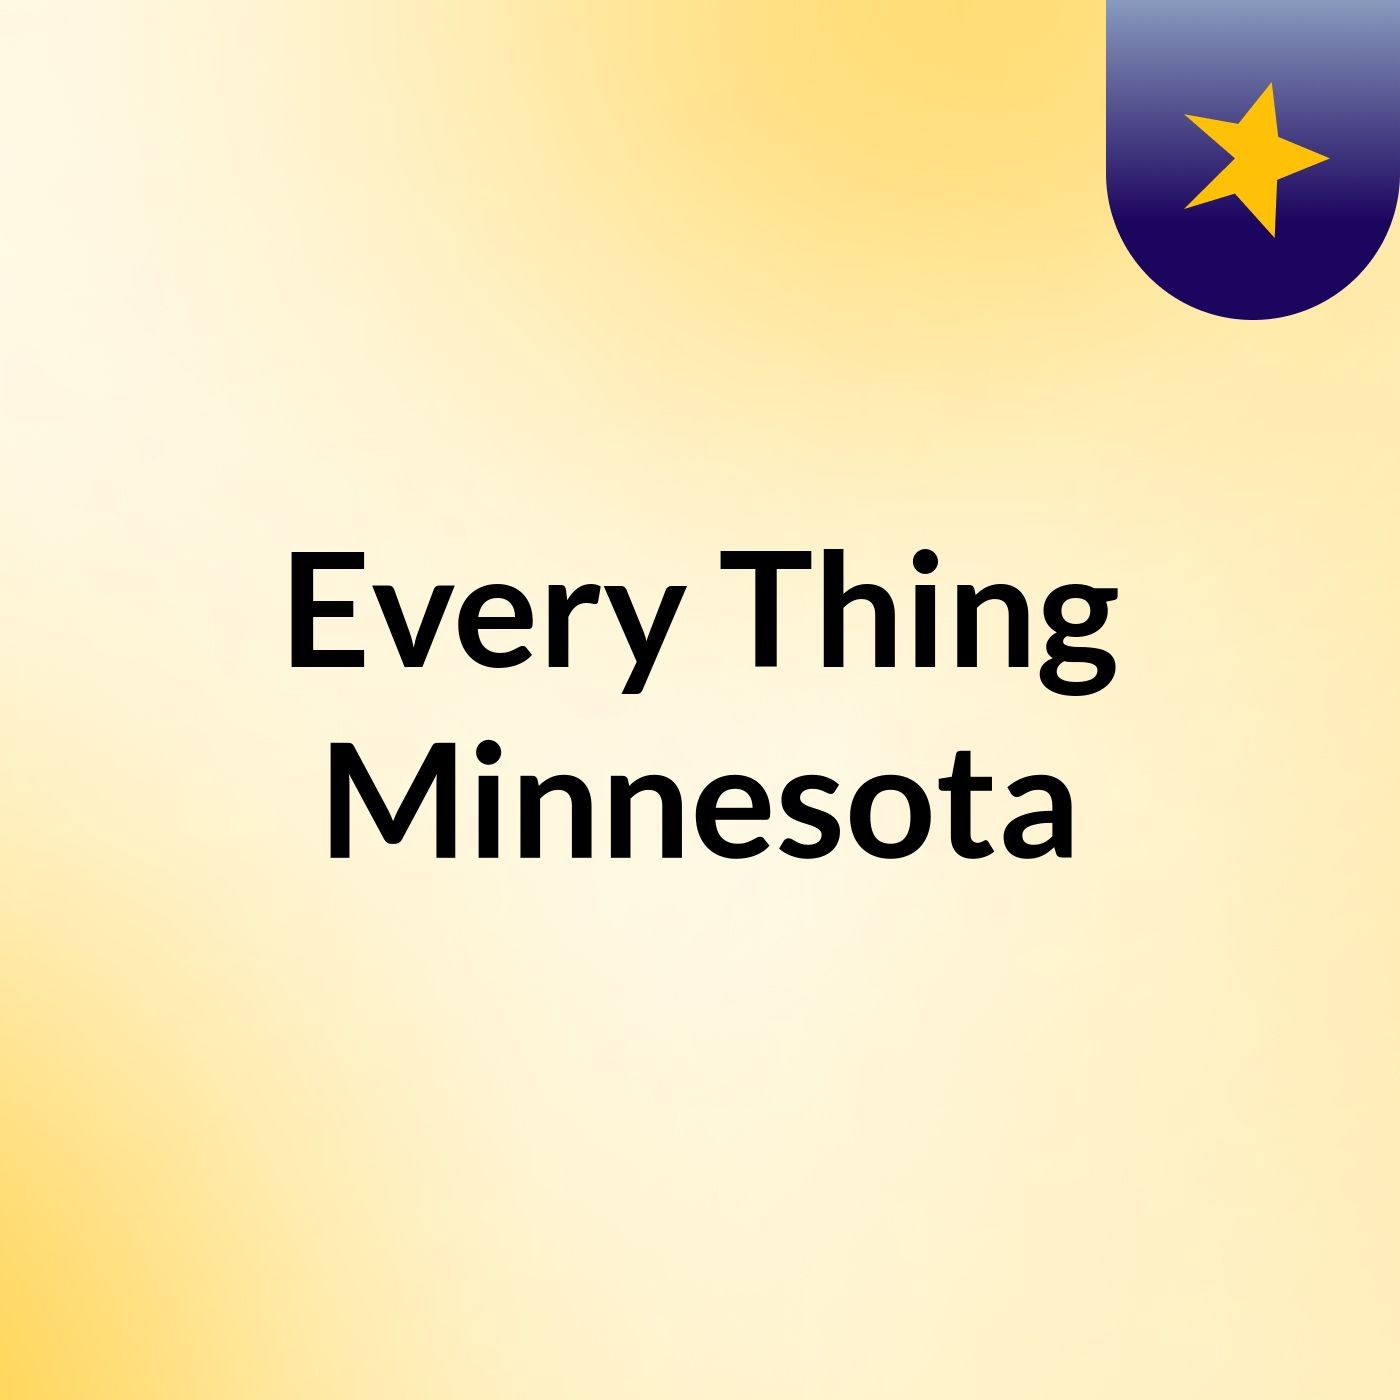 Every Thing Minnesota